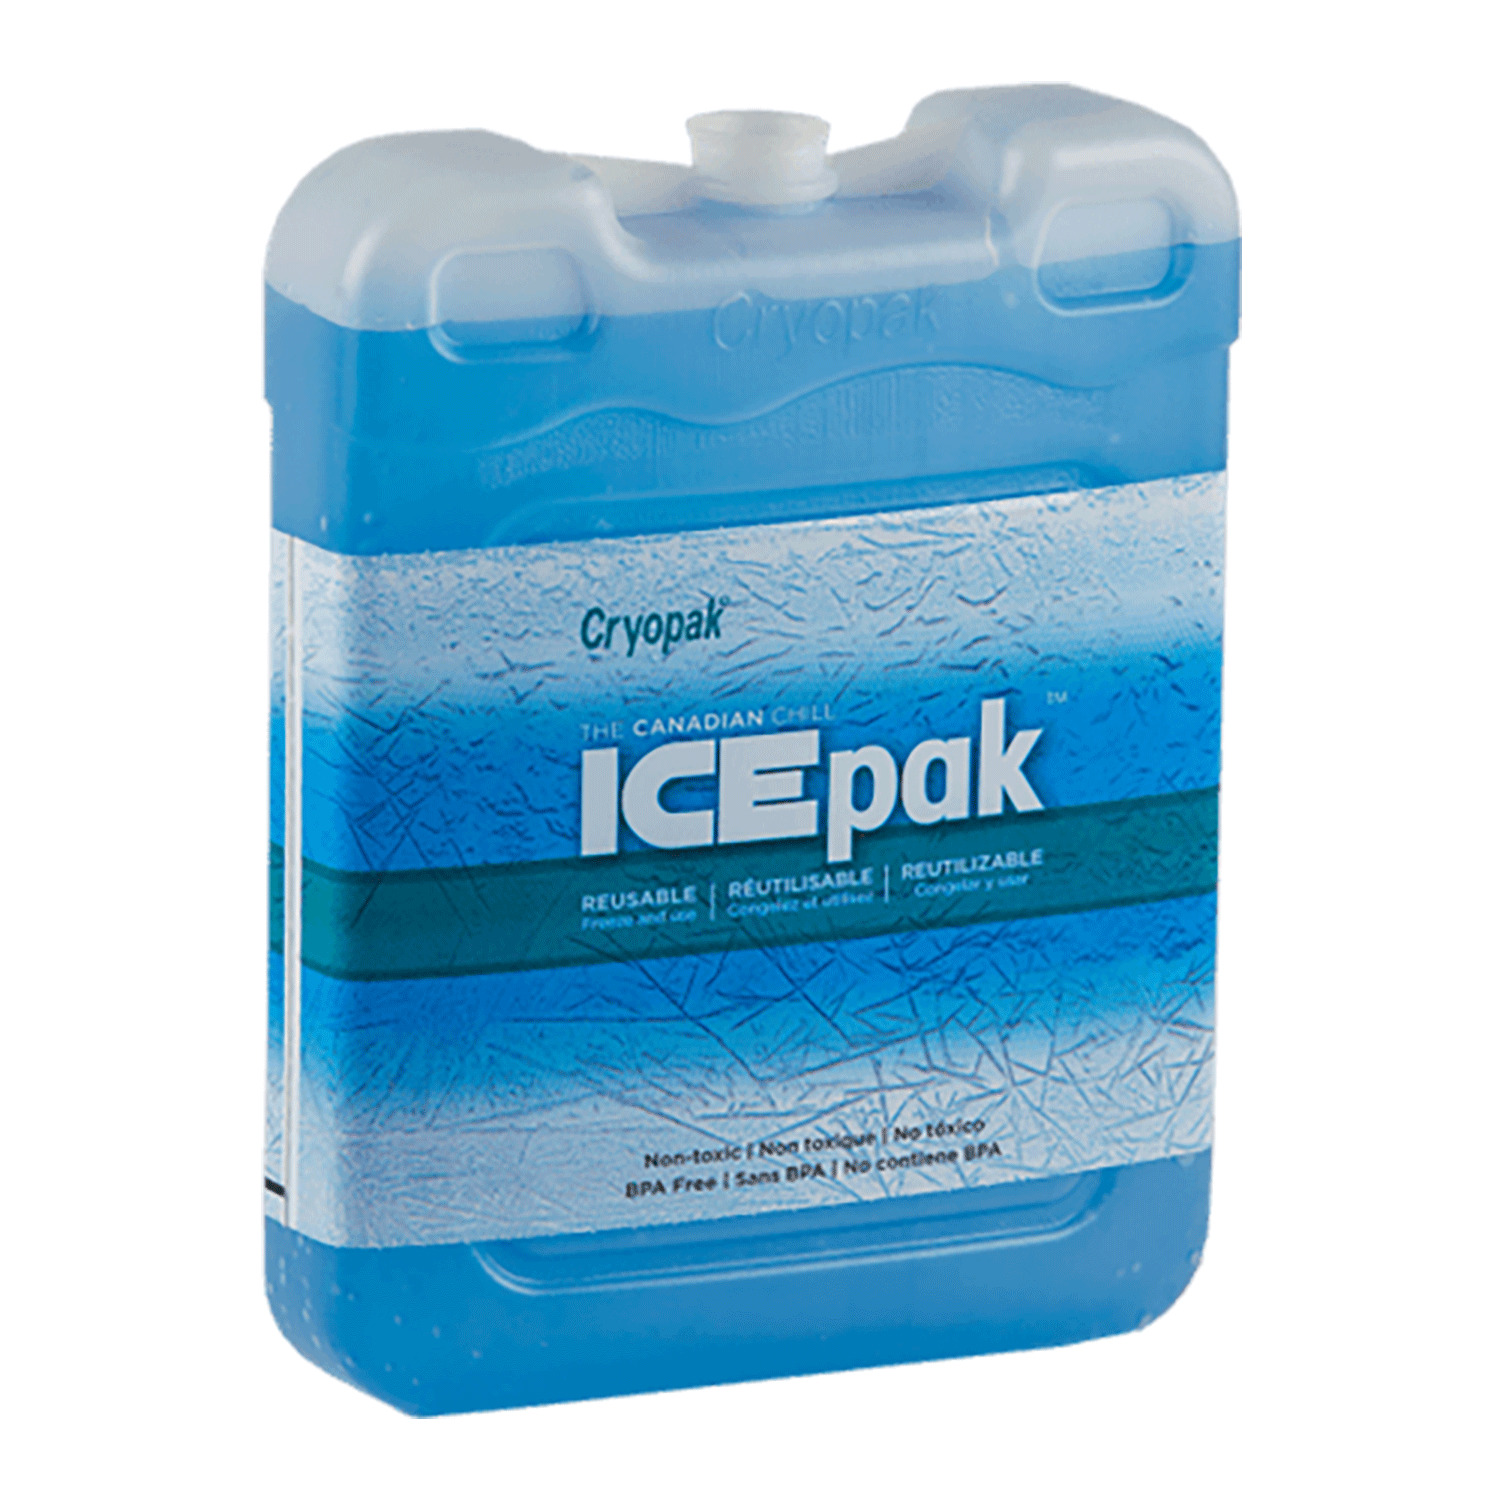 Cryopak - Ice-Pak rigide et réutilisable - Grand, 3 lb